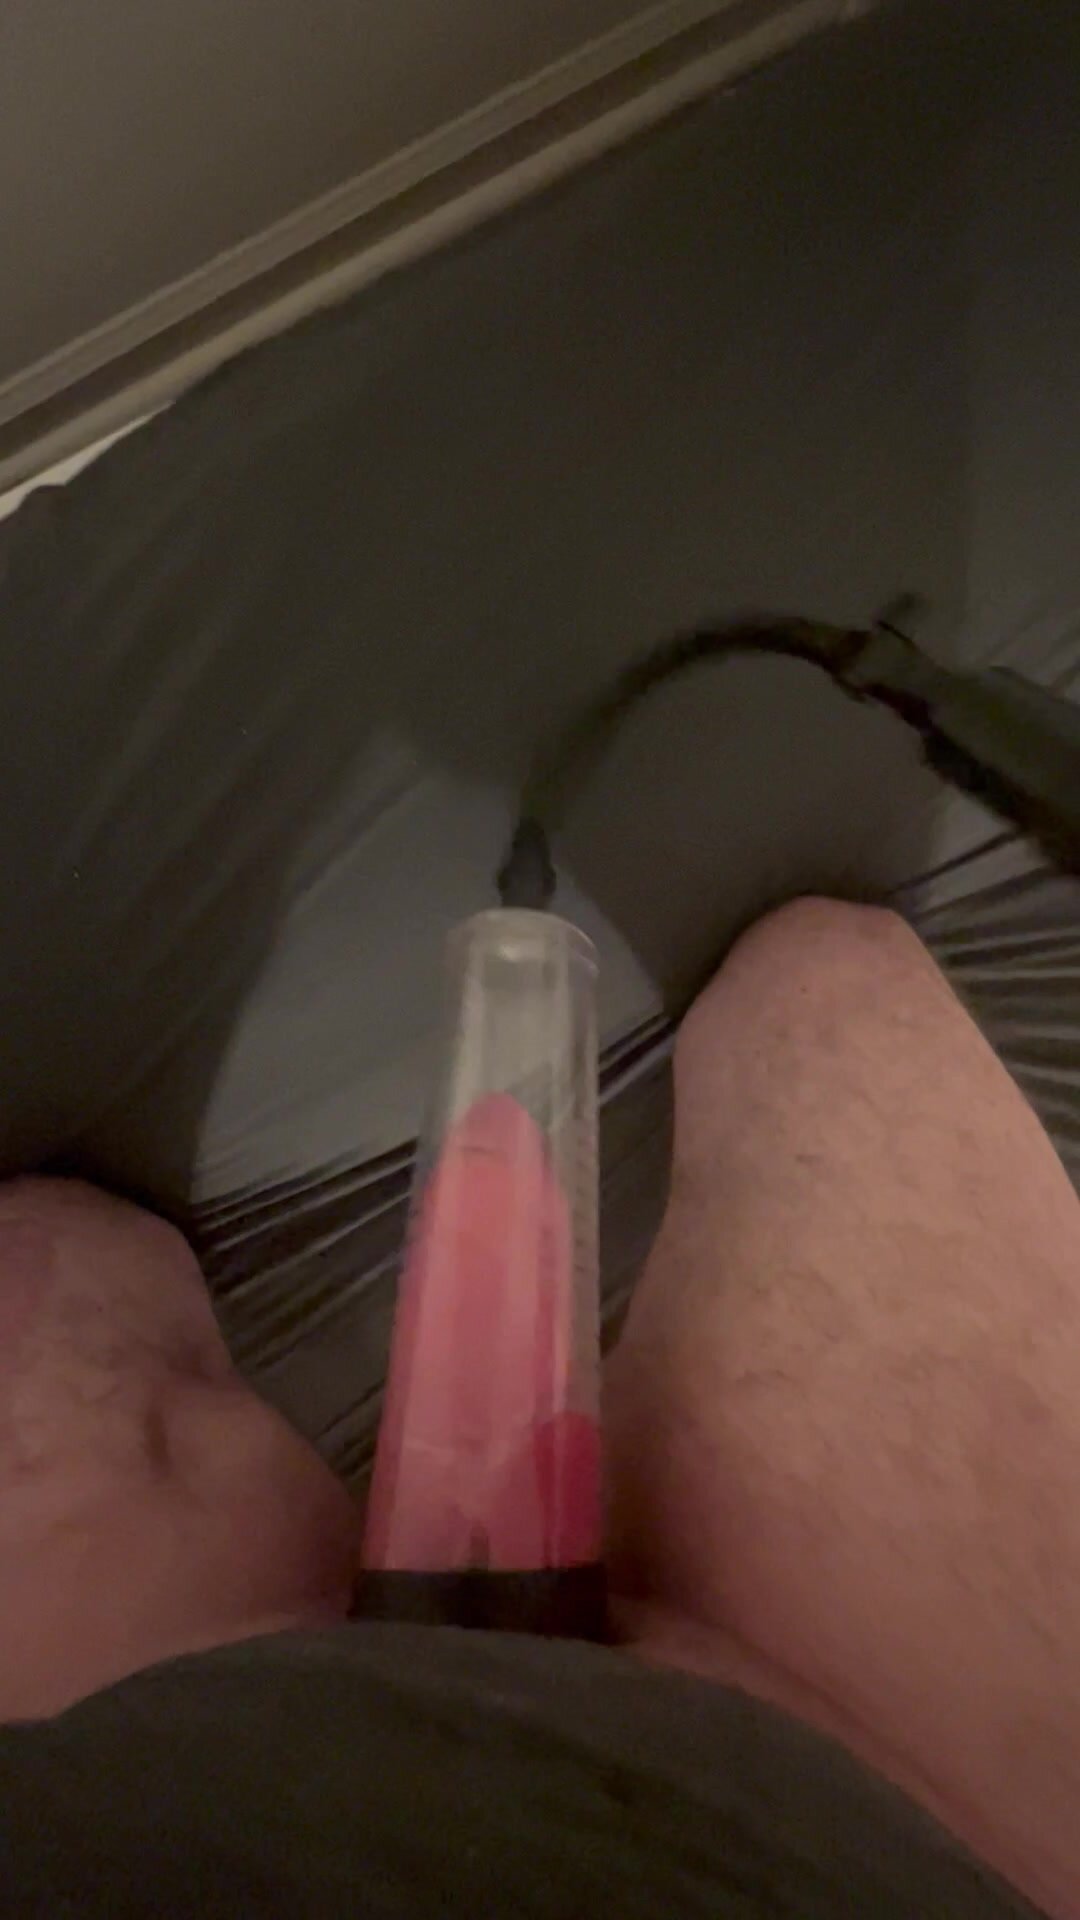 First time cock pump phalloplasty